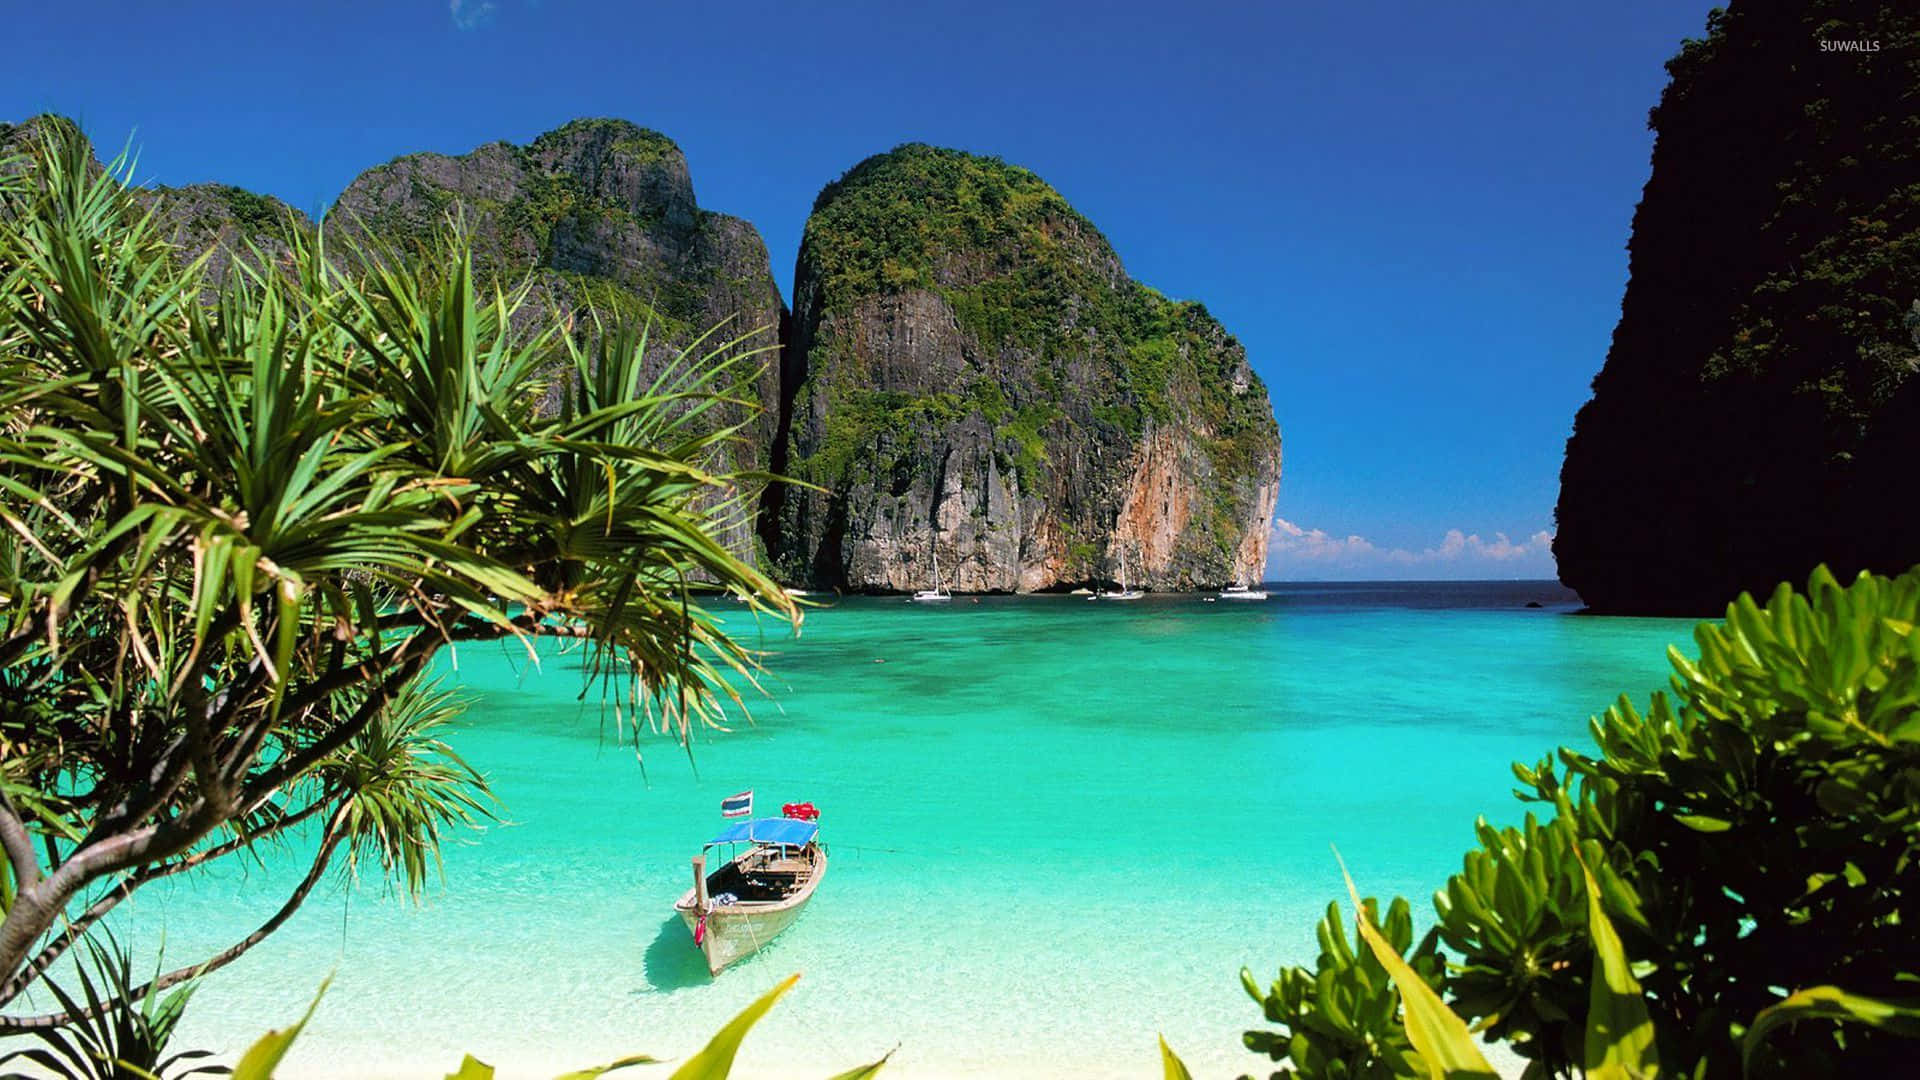 Impresionanteatardecer En La Playa De Tailandia. Fondo de pantalla